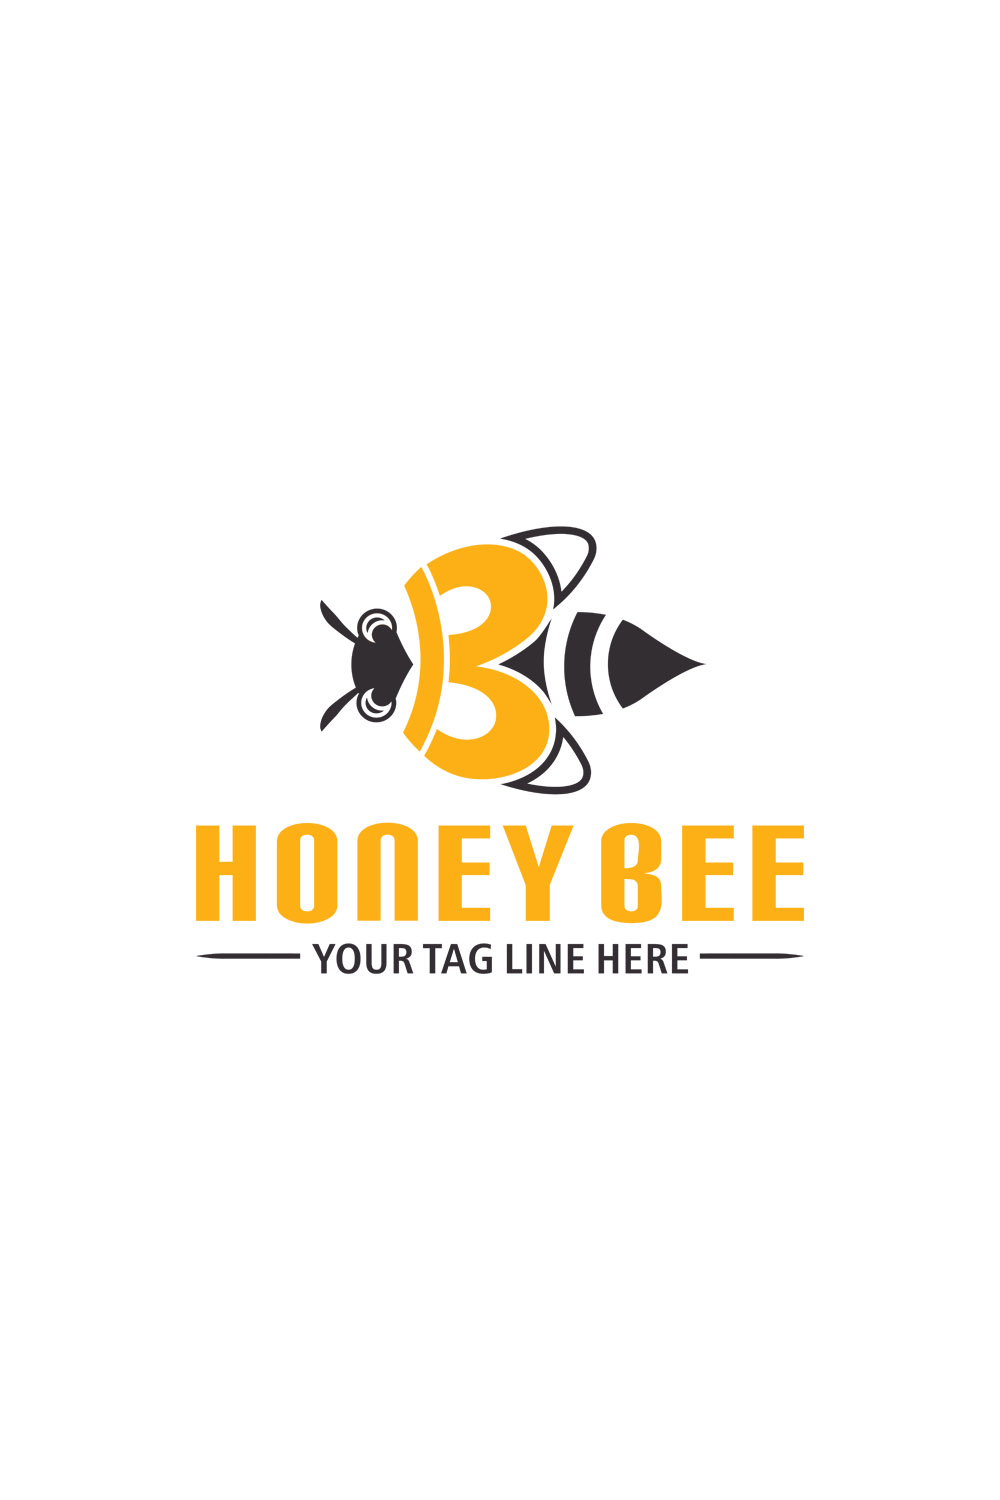 Huney Bee logo for Honey Company pinterest preview image.